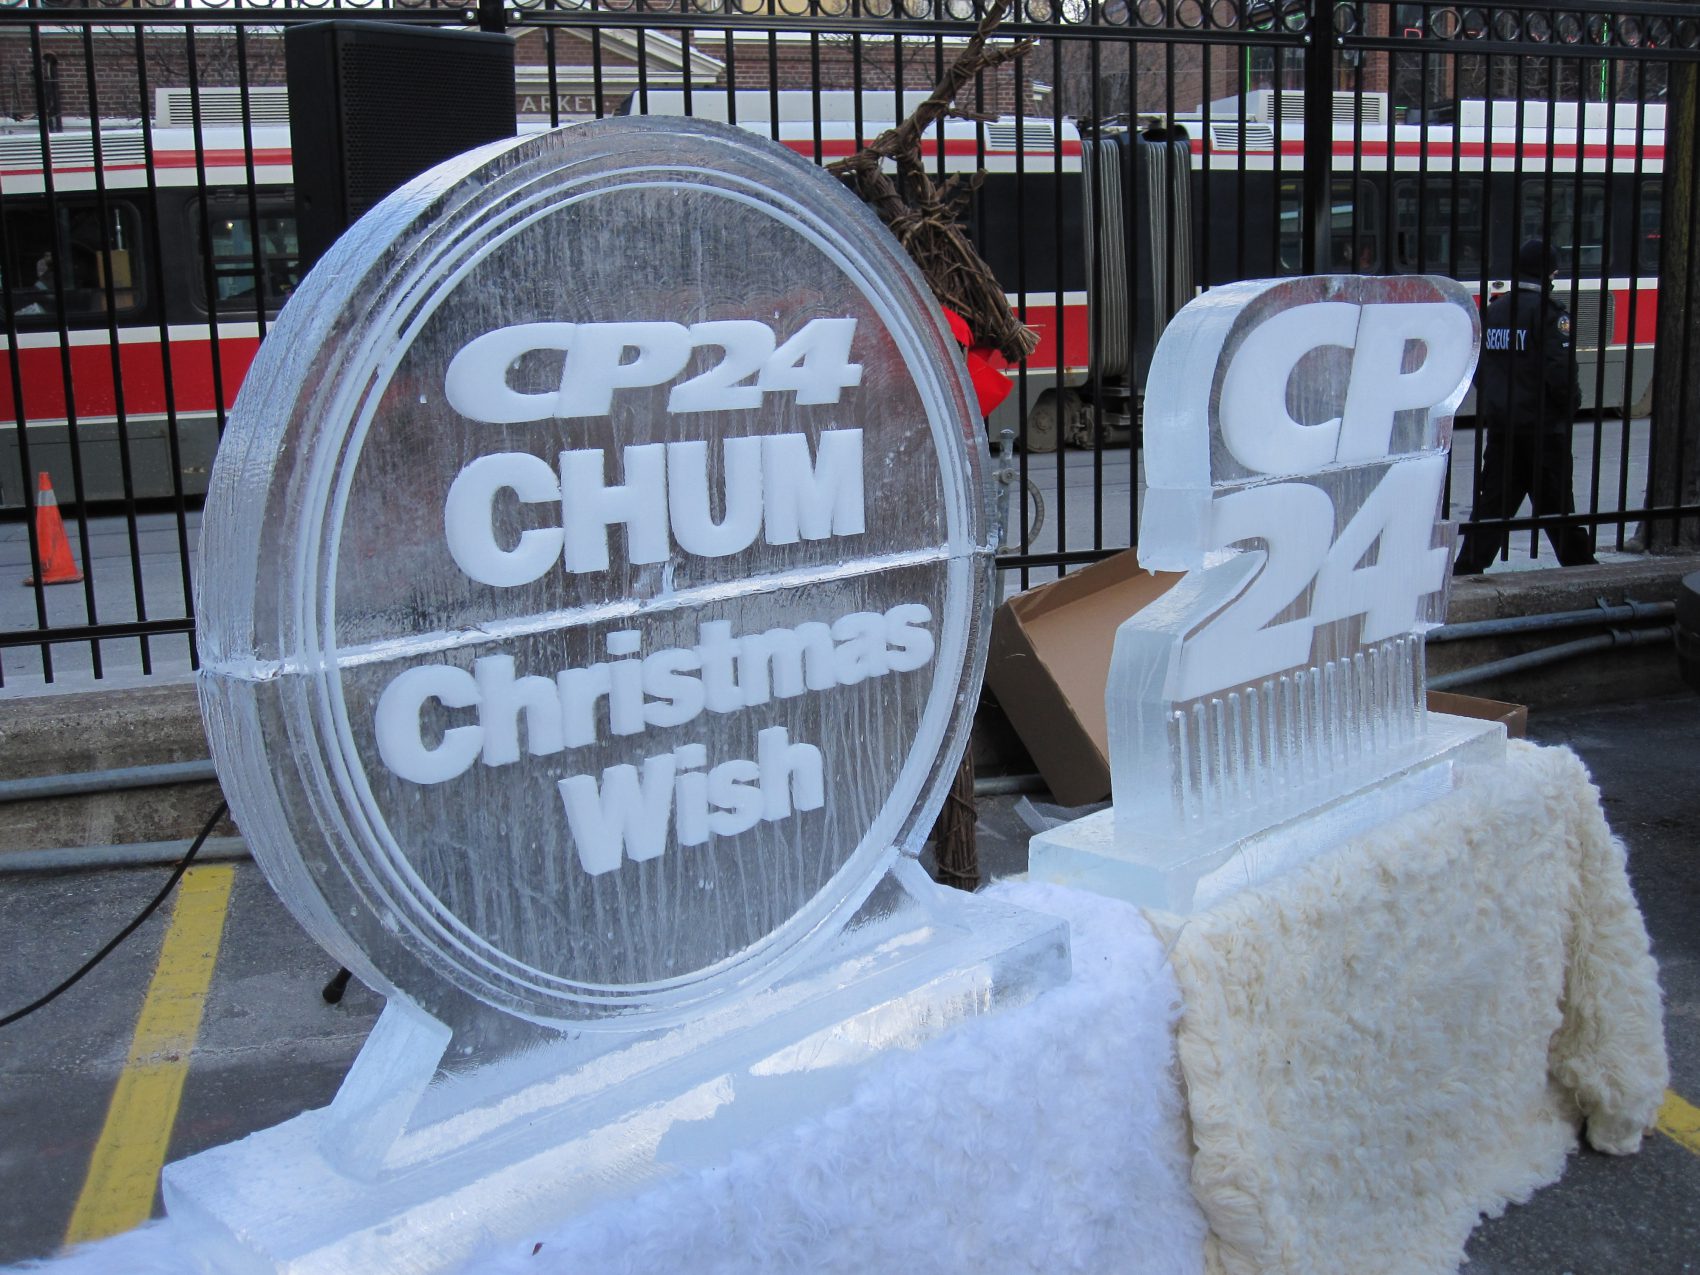 CP24 Chum christmas wish logo